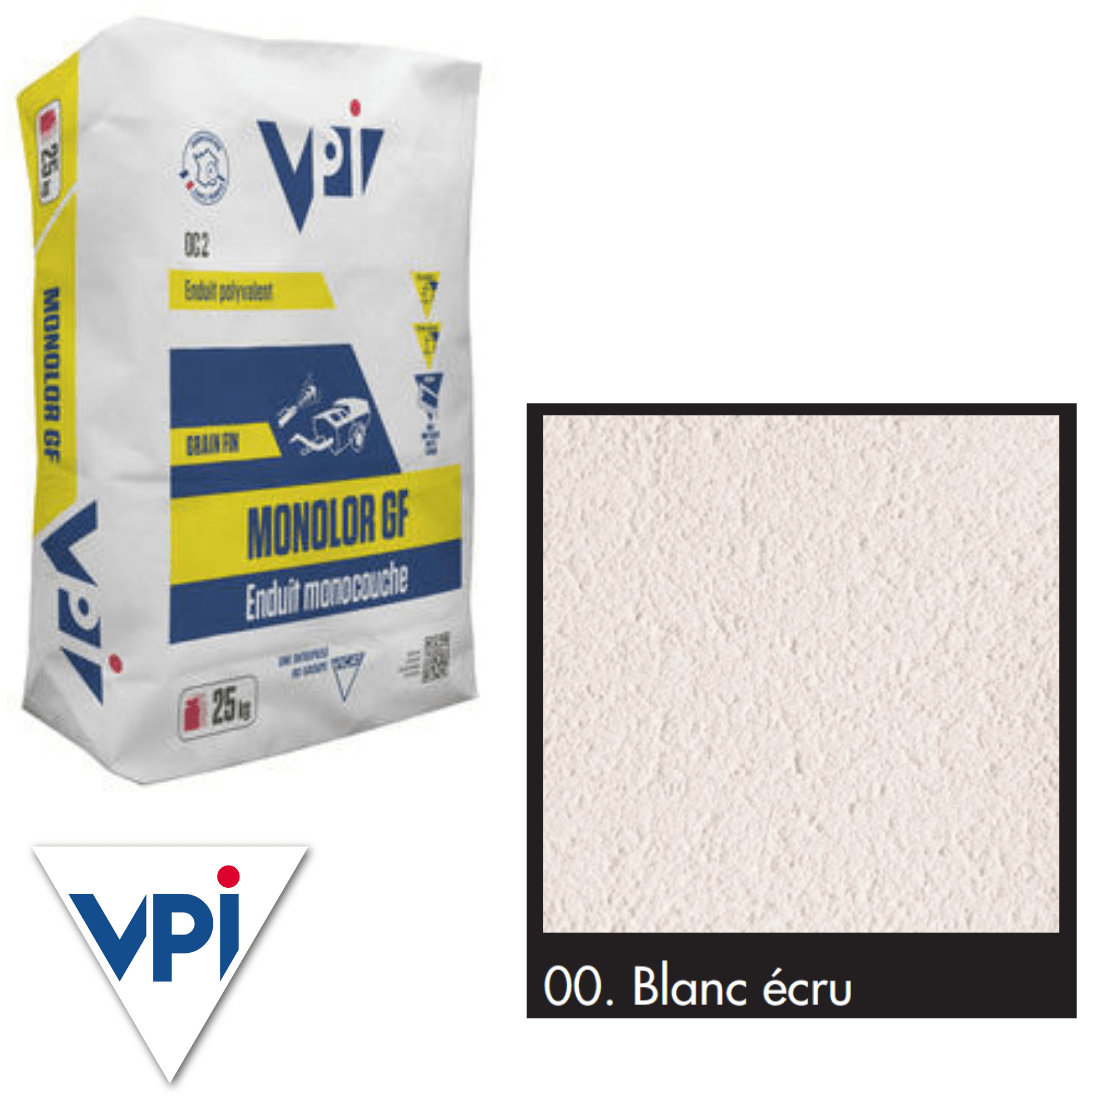 VPI Monocal GM00 Blanc Ecru 25kg - Builders Merchant Direct